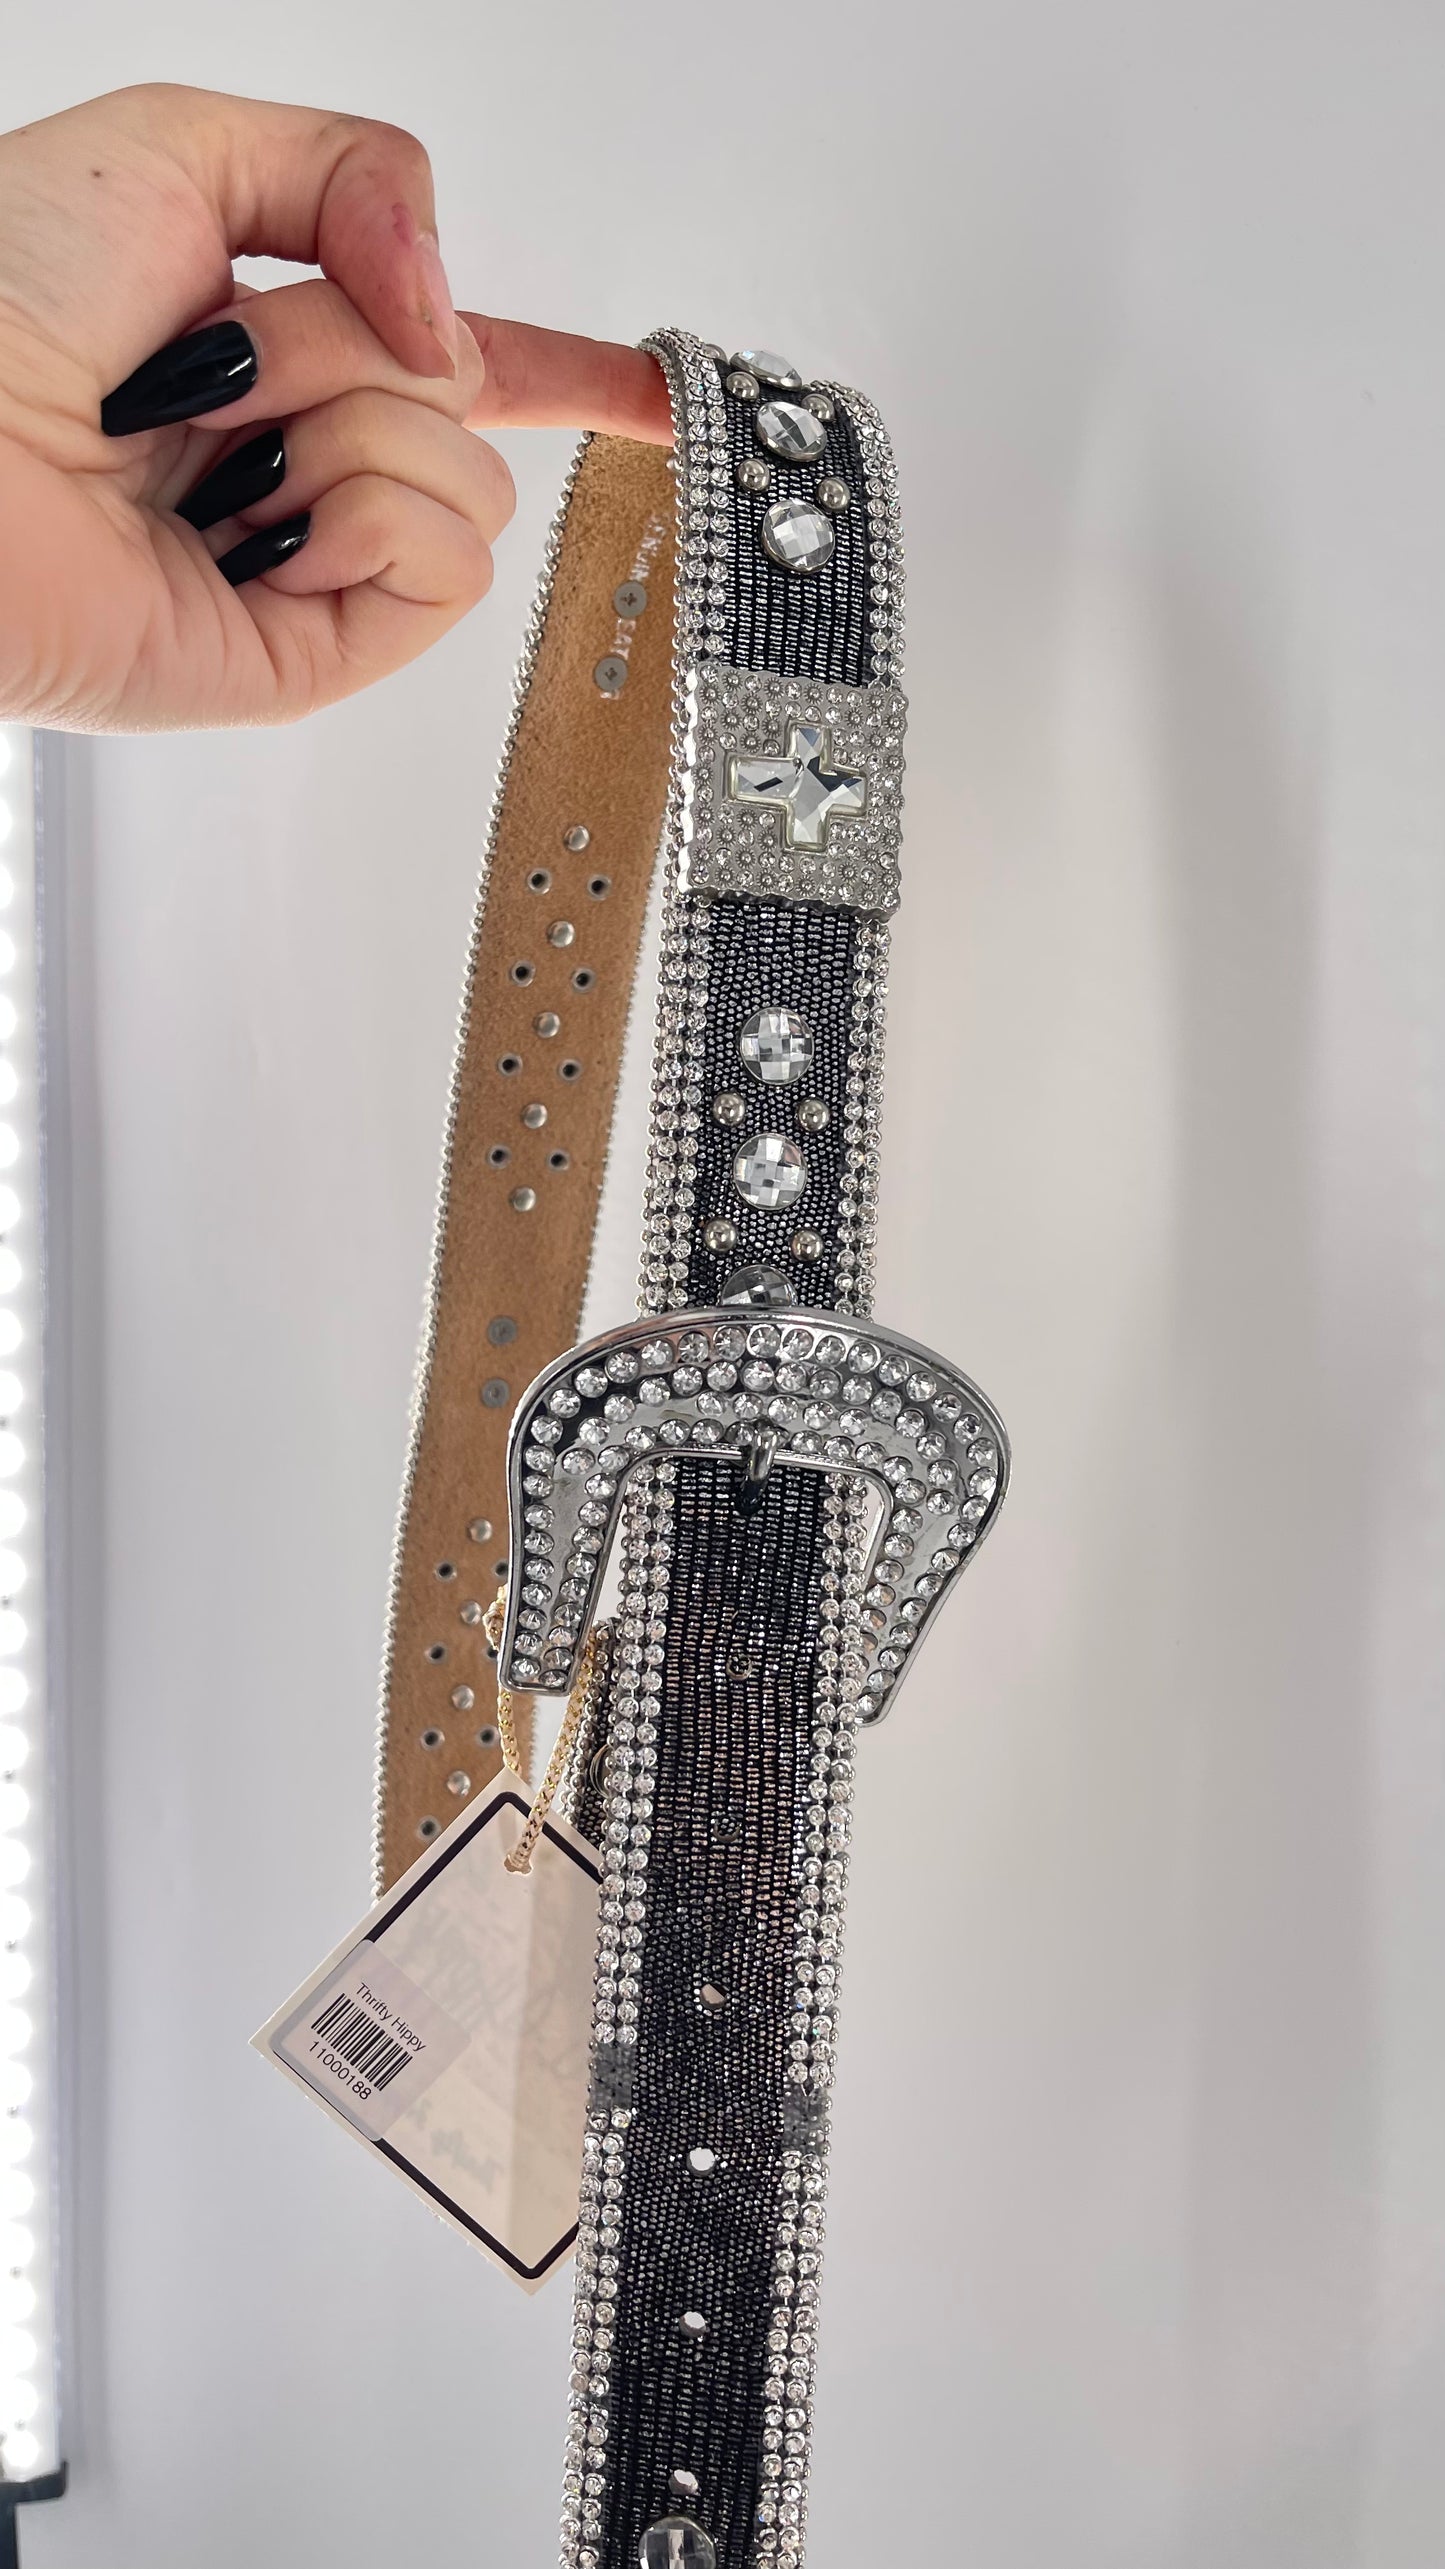 Free People Dark Silver Metallic Snake Print Belt covered in Crystal Embellishments and Heavy Metal Crosses (M)